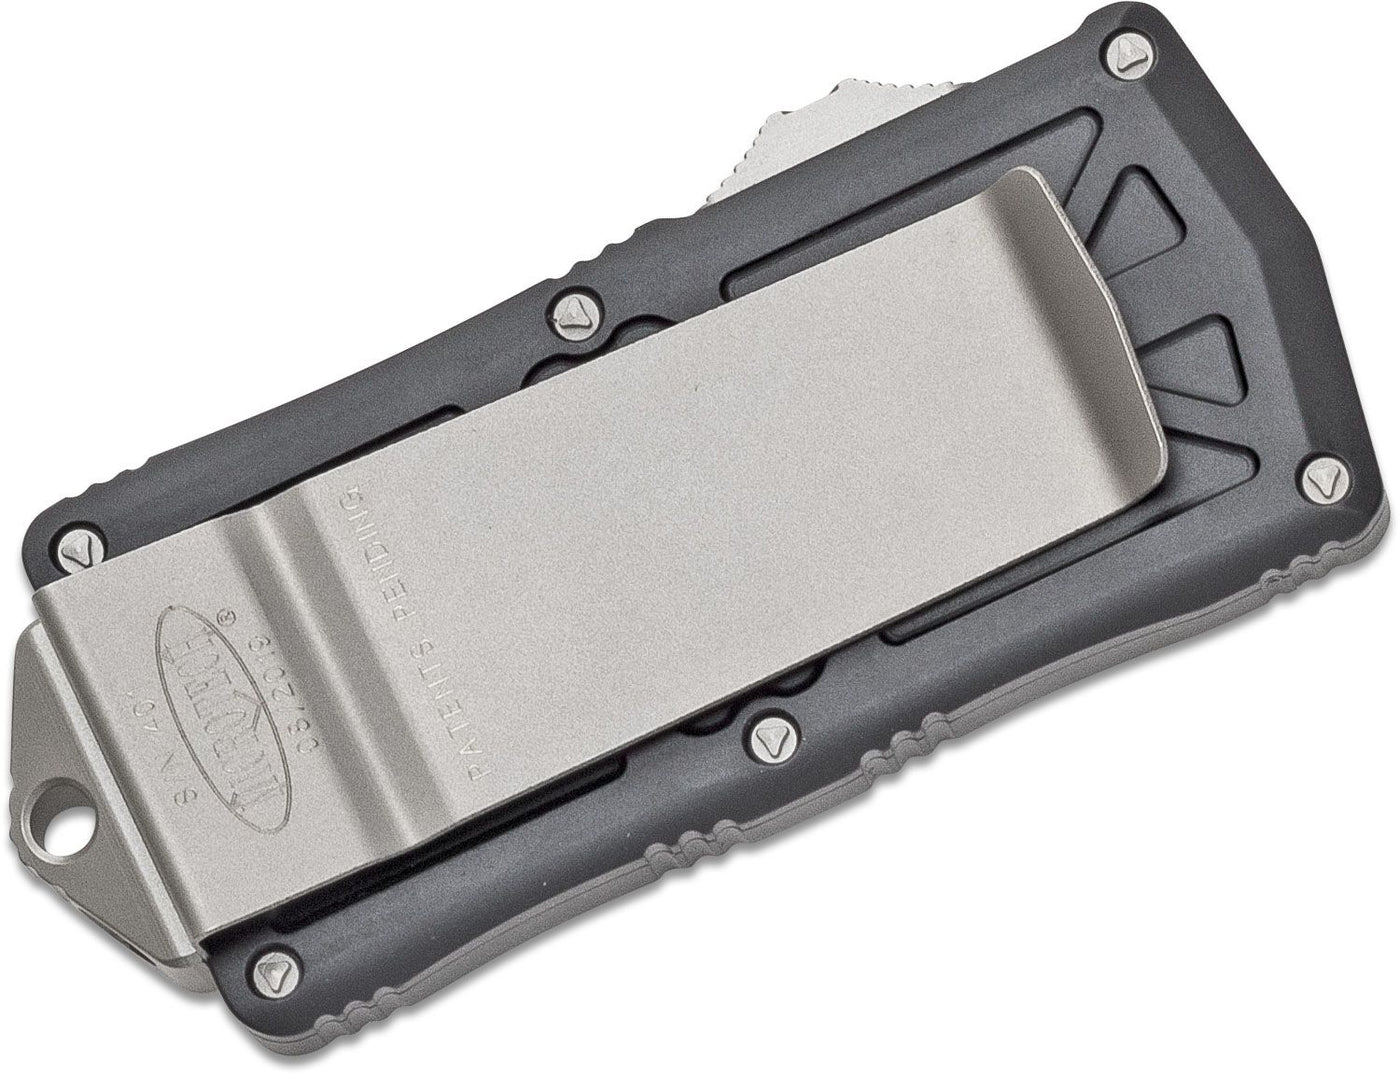 Microtech 157-10 Exocet OTF Money Clip AUTO Knife 1.98" Stonewashed Double Edge Blade, Black Aluminum Handles